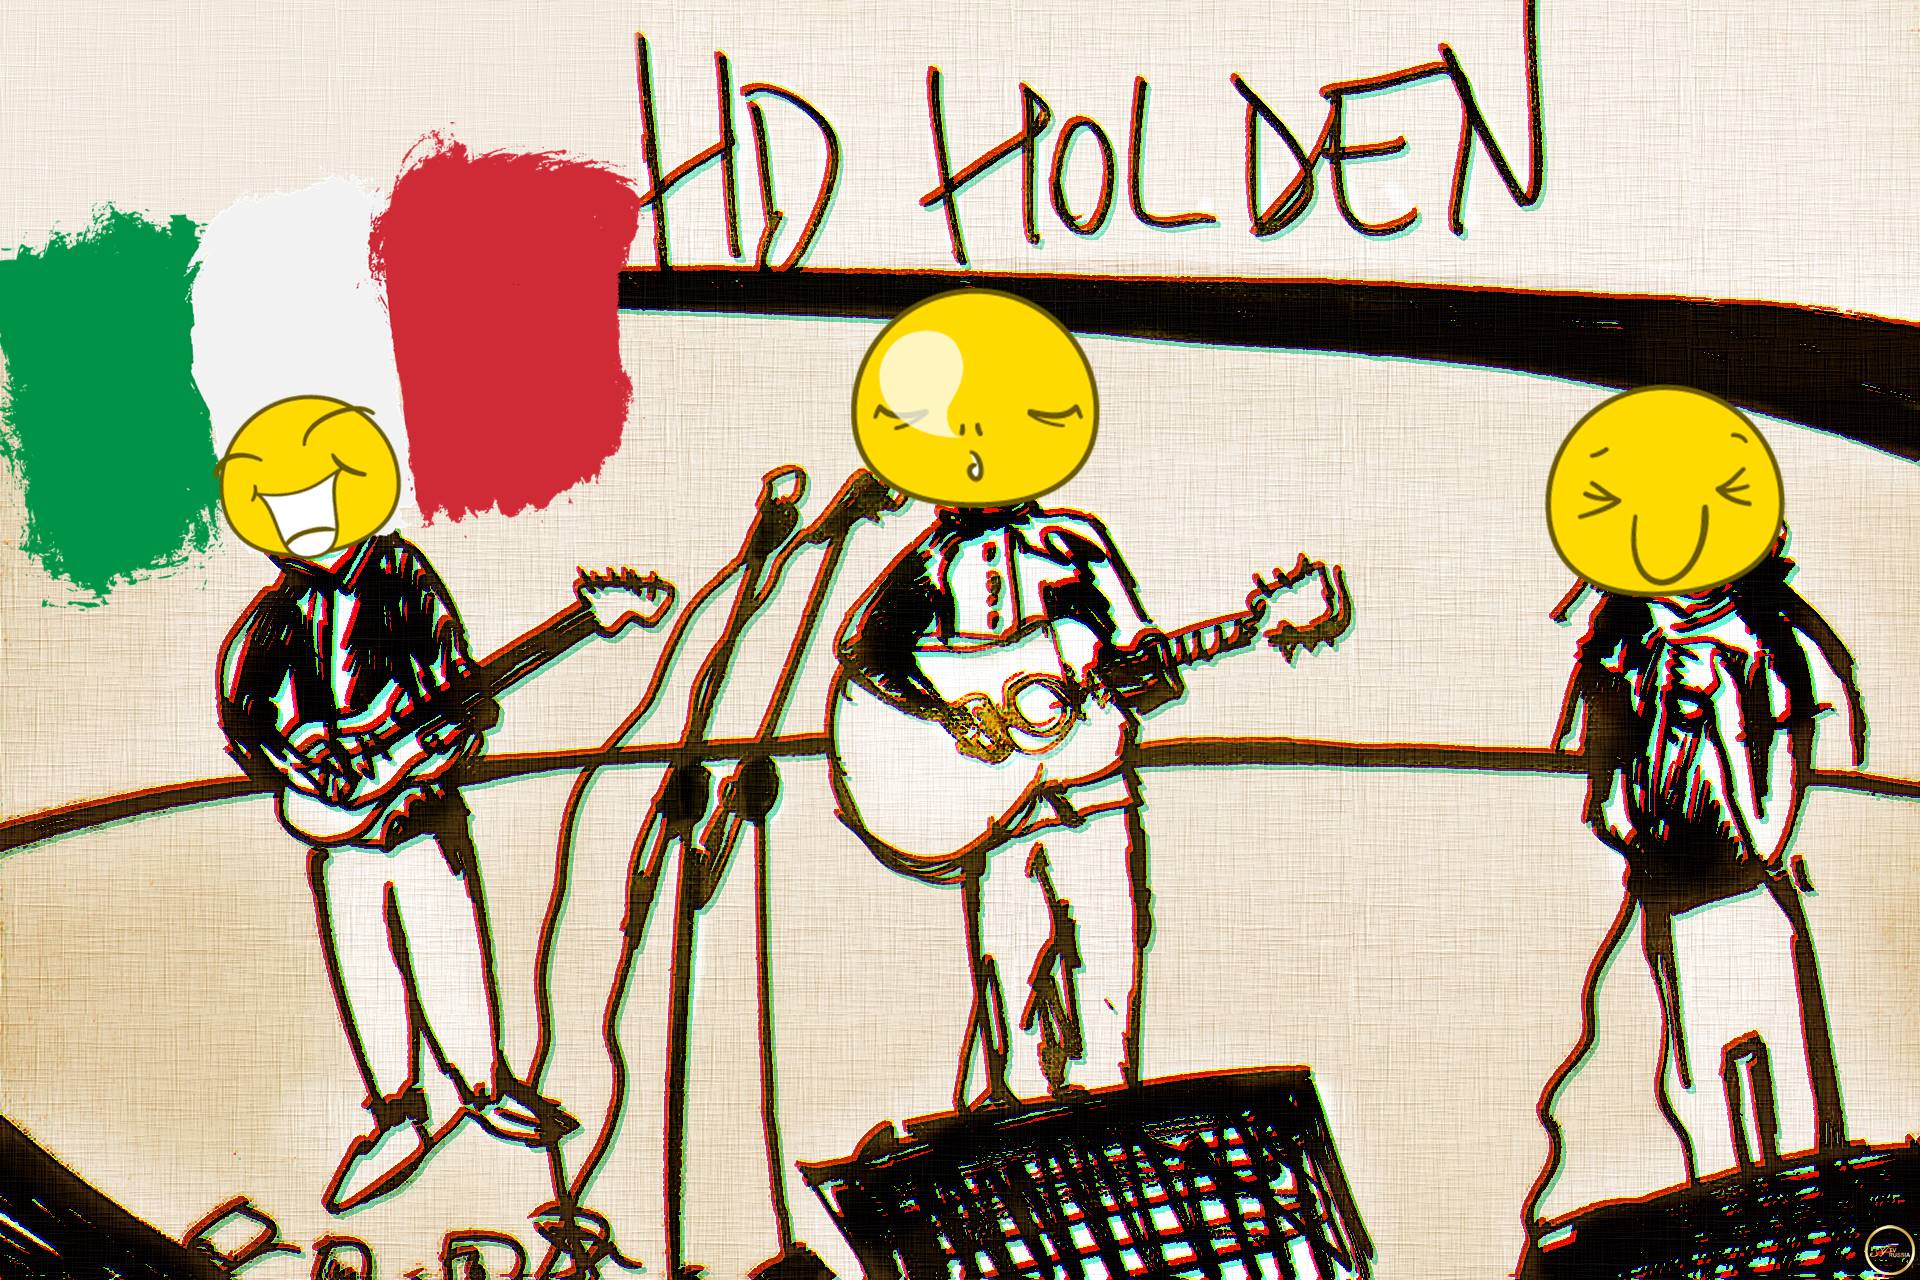 HD Holden